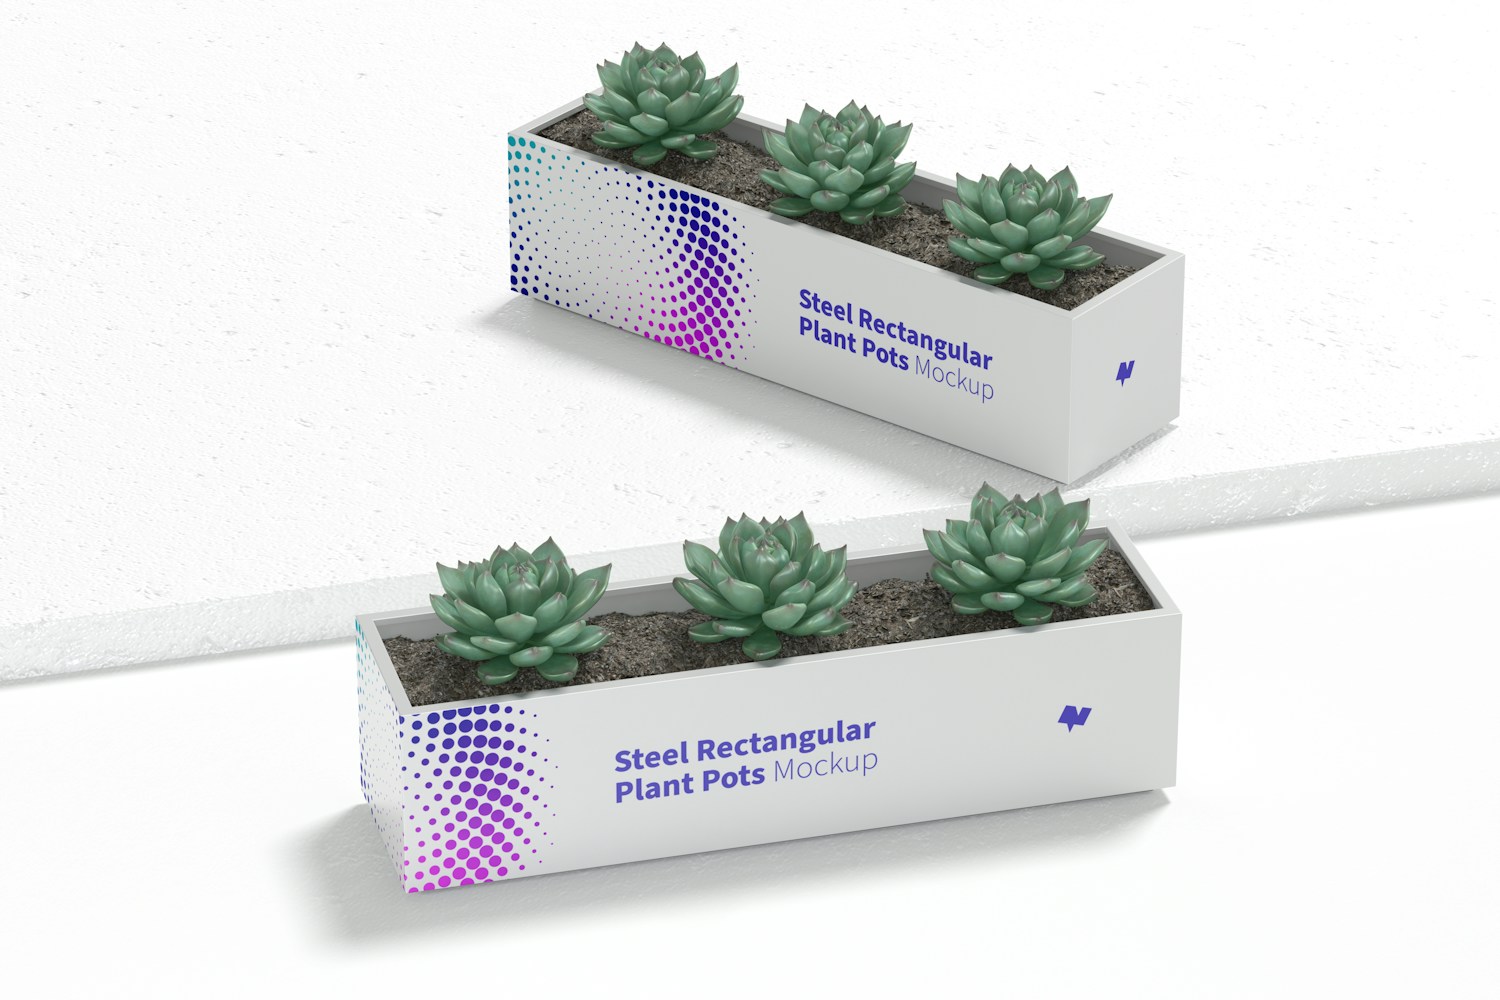 Steel Rectangular Plant Pots Mockup, Perspective